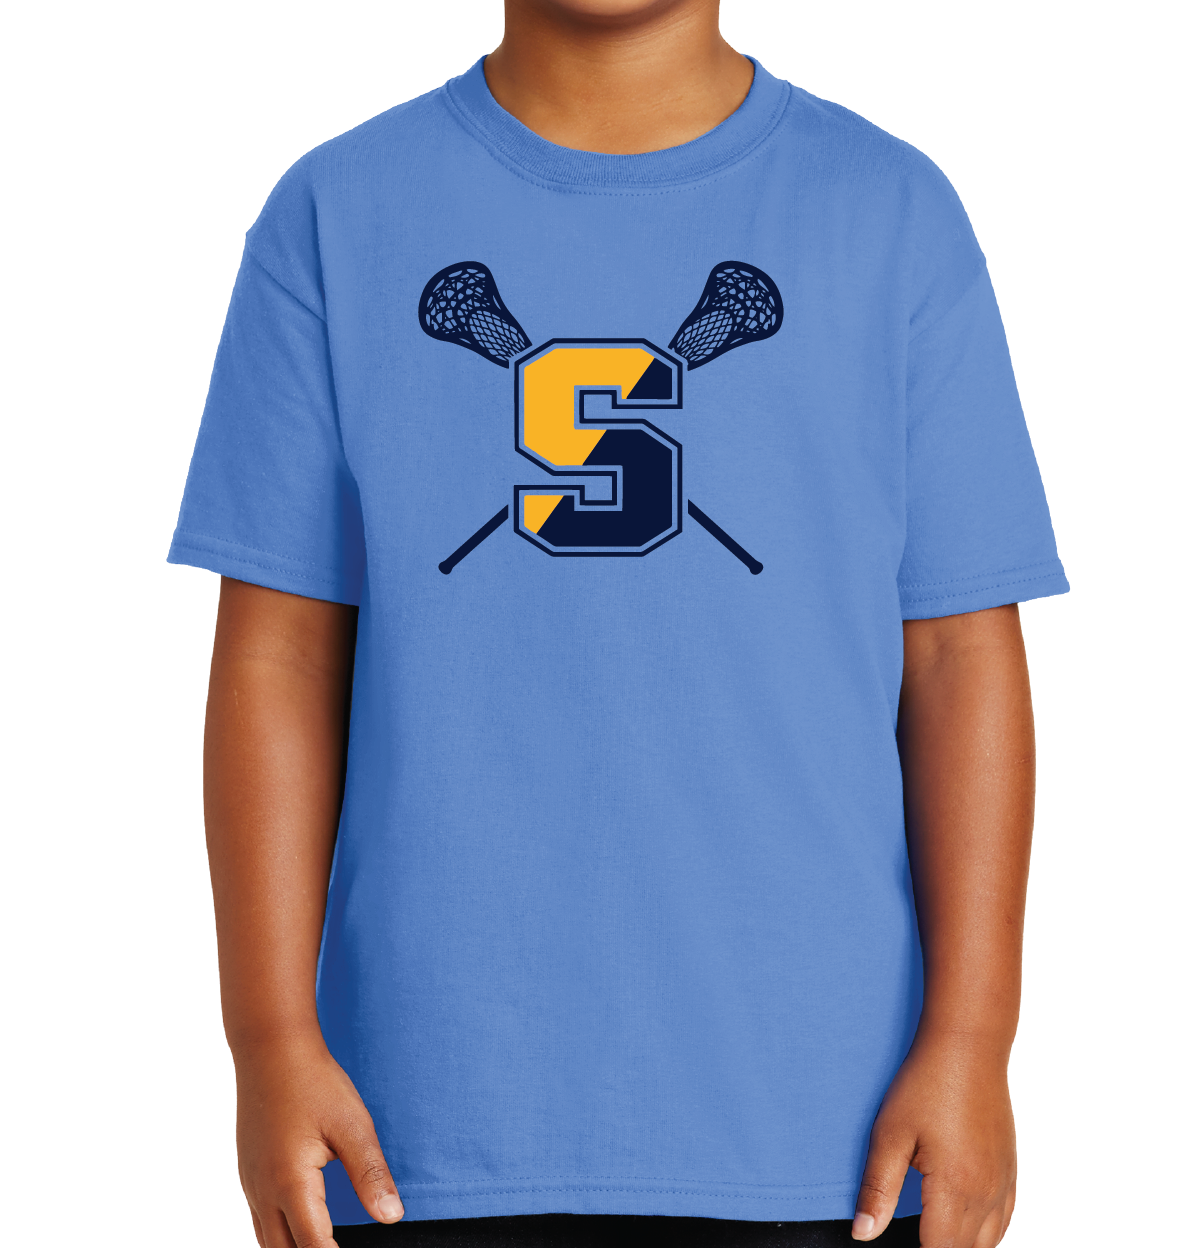 T-Shirt: Simsbury Youth Lacrosse